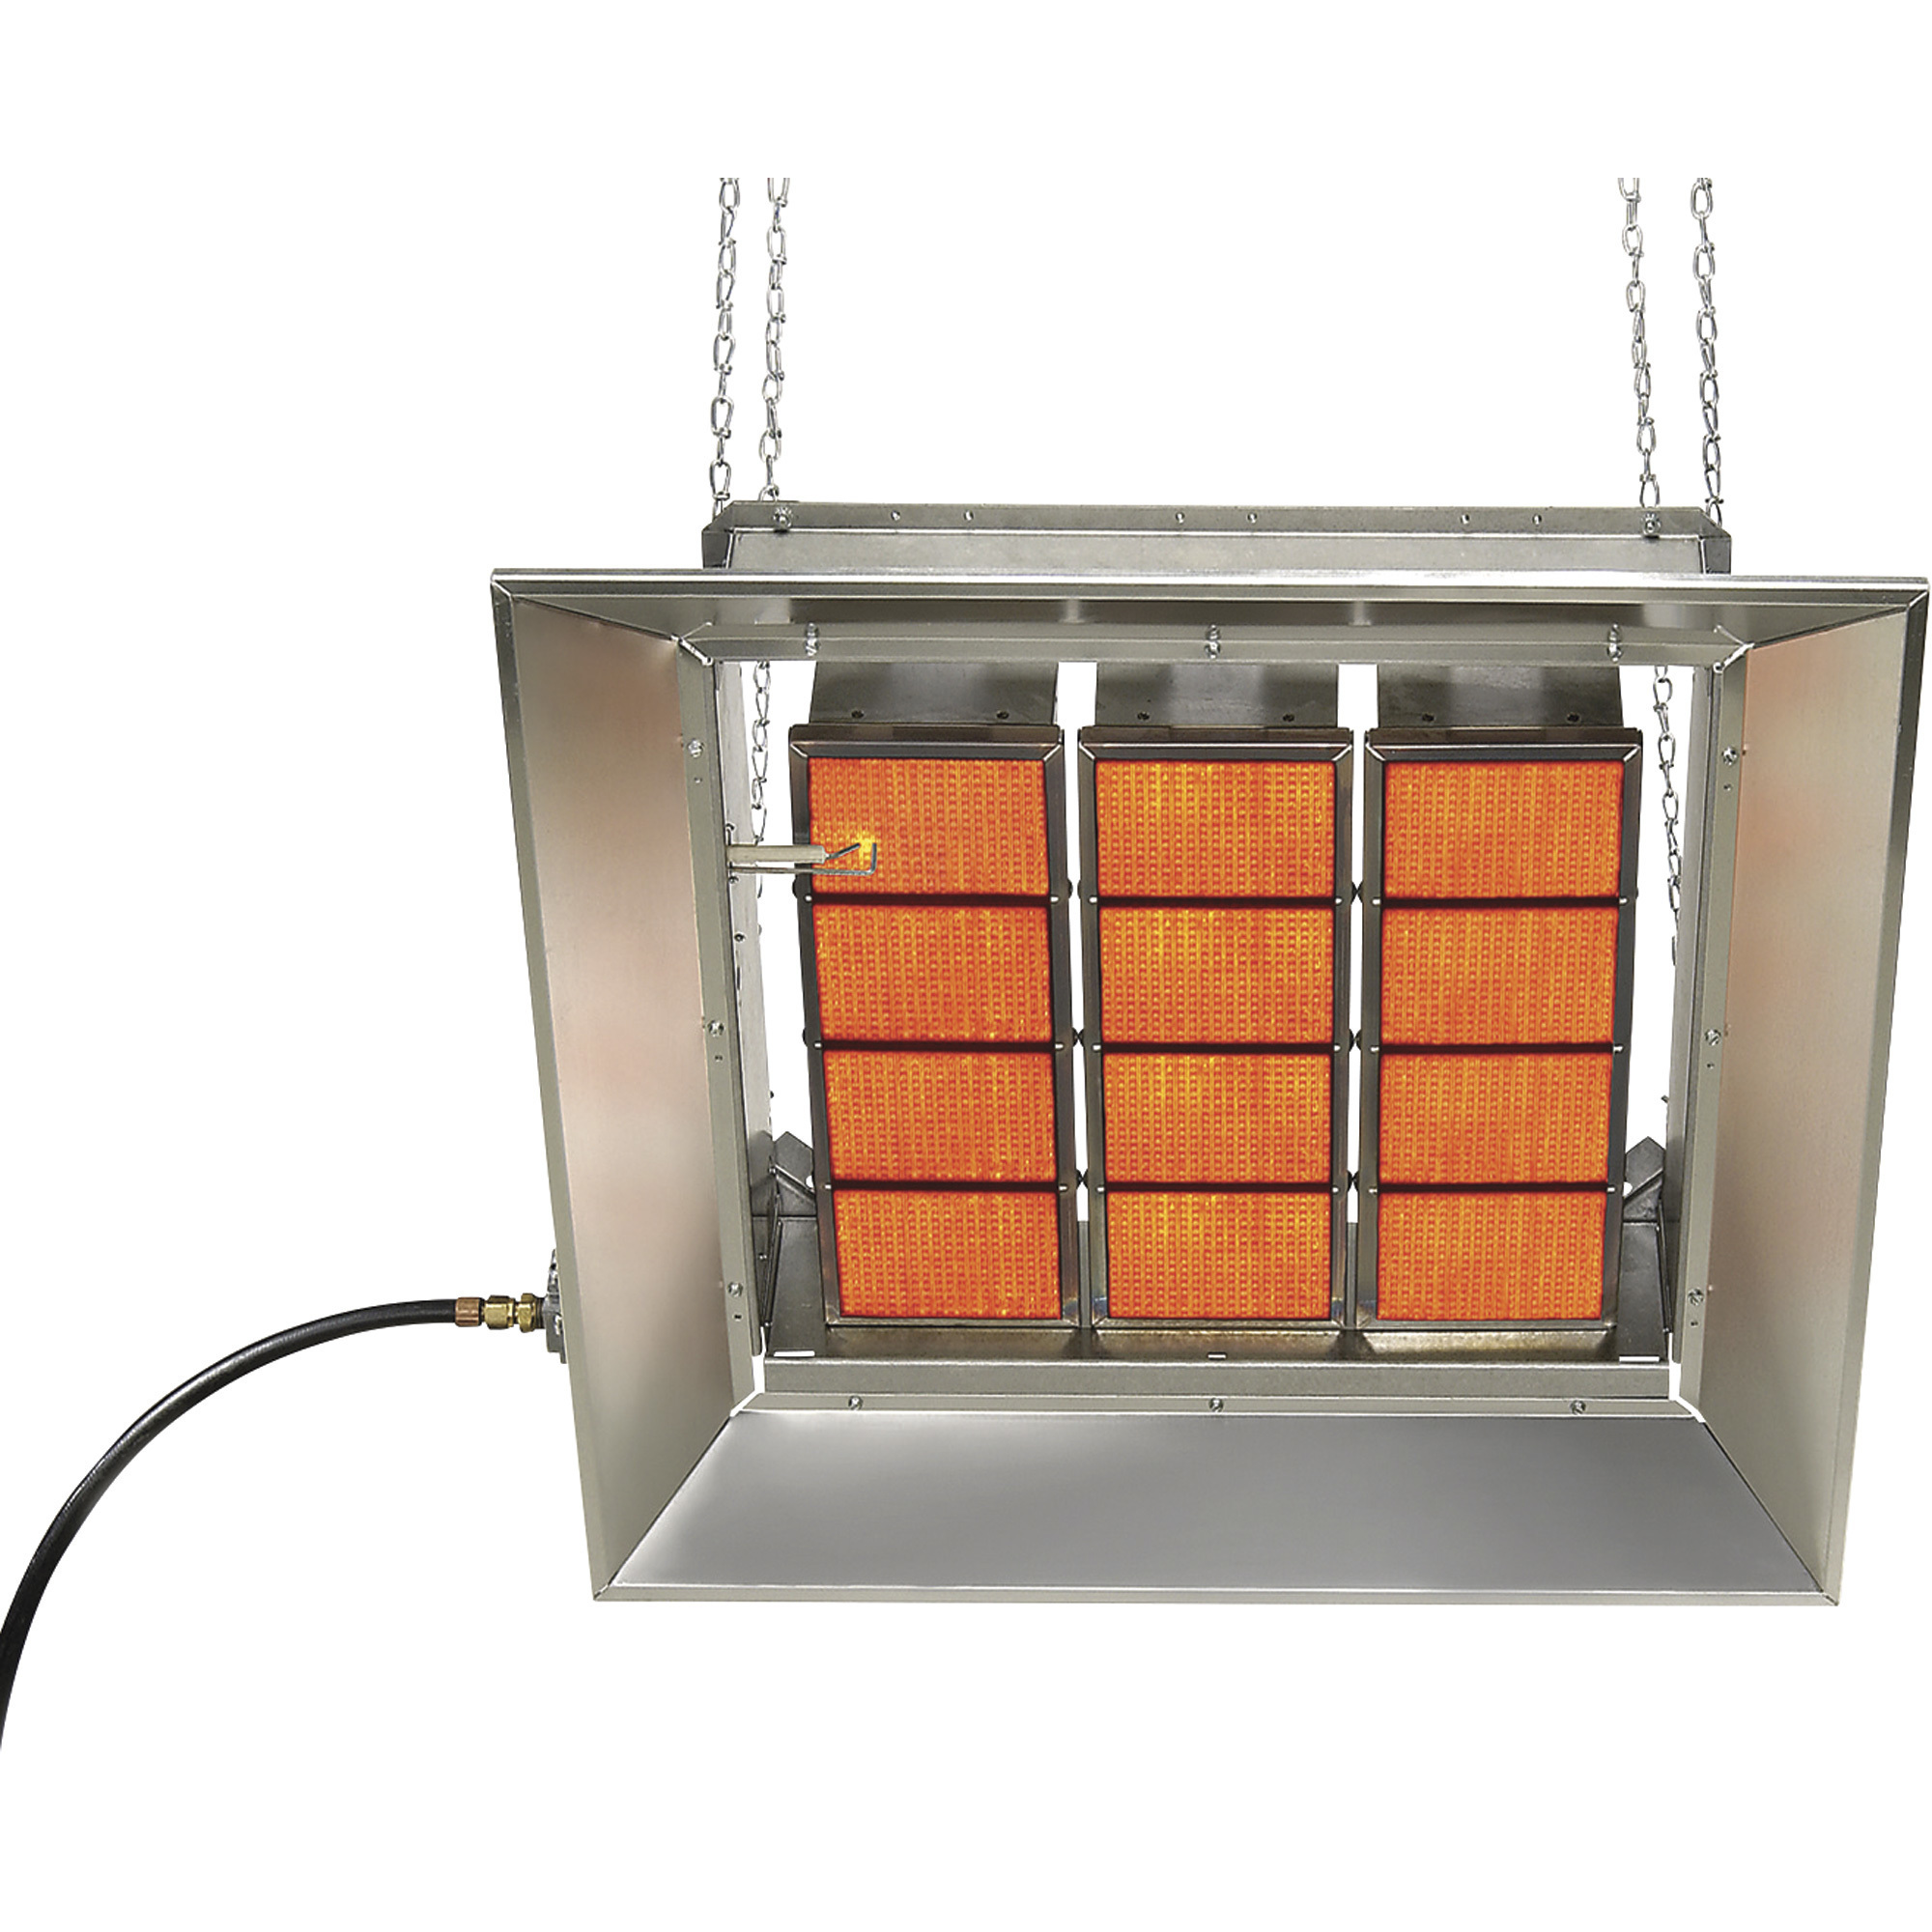 SunStar Heating Products Infrared Ceramic Heater, Natural Gas, 100,000 BTU, Model SG10-N